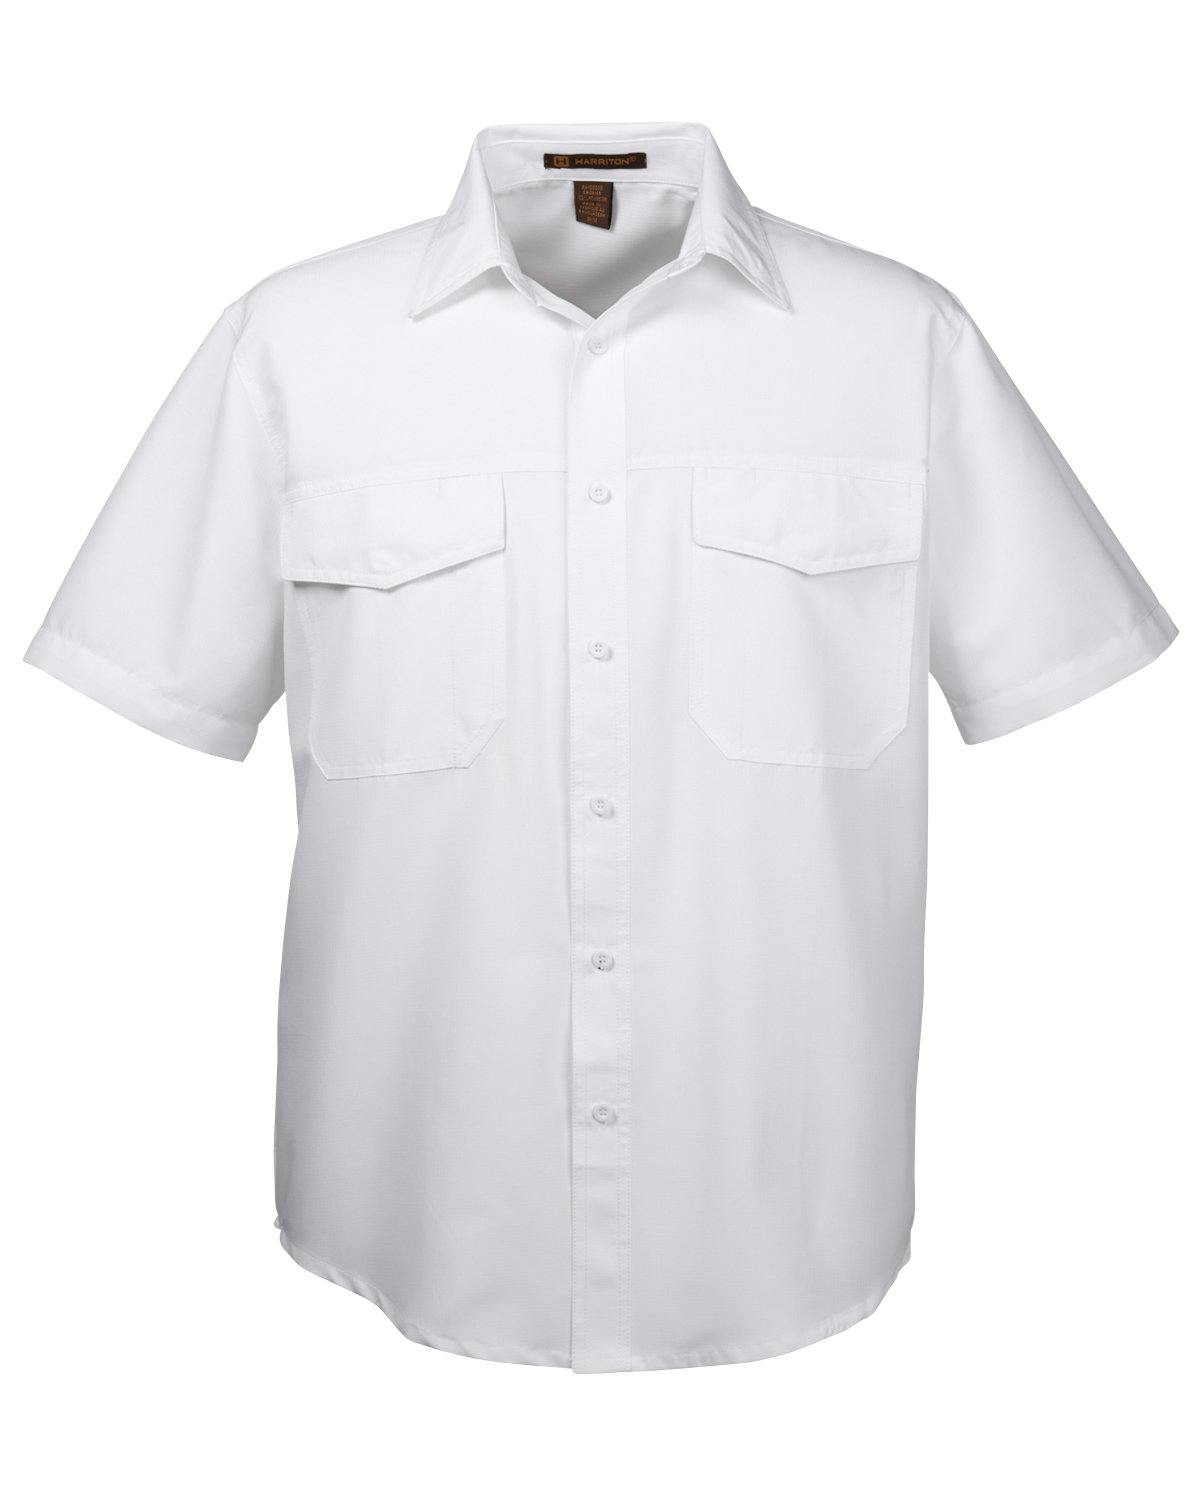 Image for Men's Key West Short-Sleeve Performance Staff Shirt